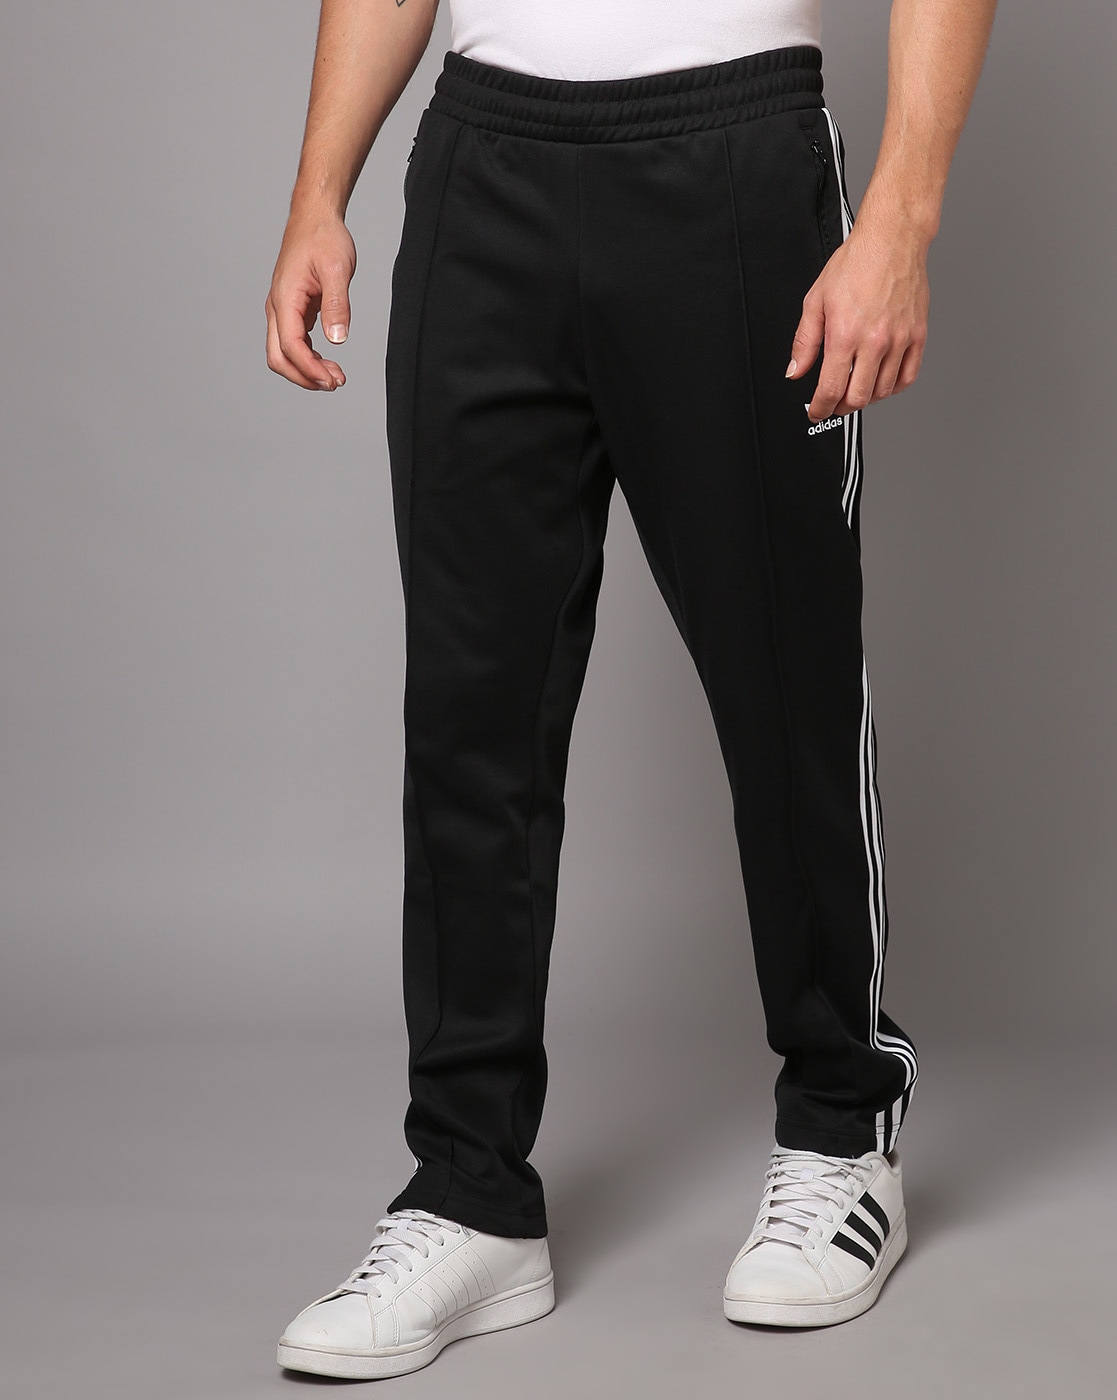 Adidas Originals Women's Large Logo Track Pants Black Size Medium -  Walmart.com